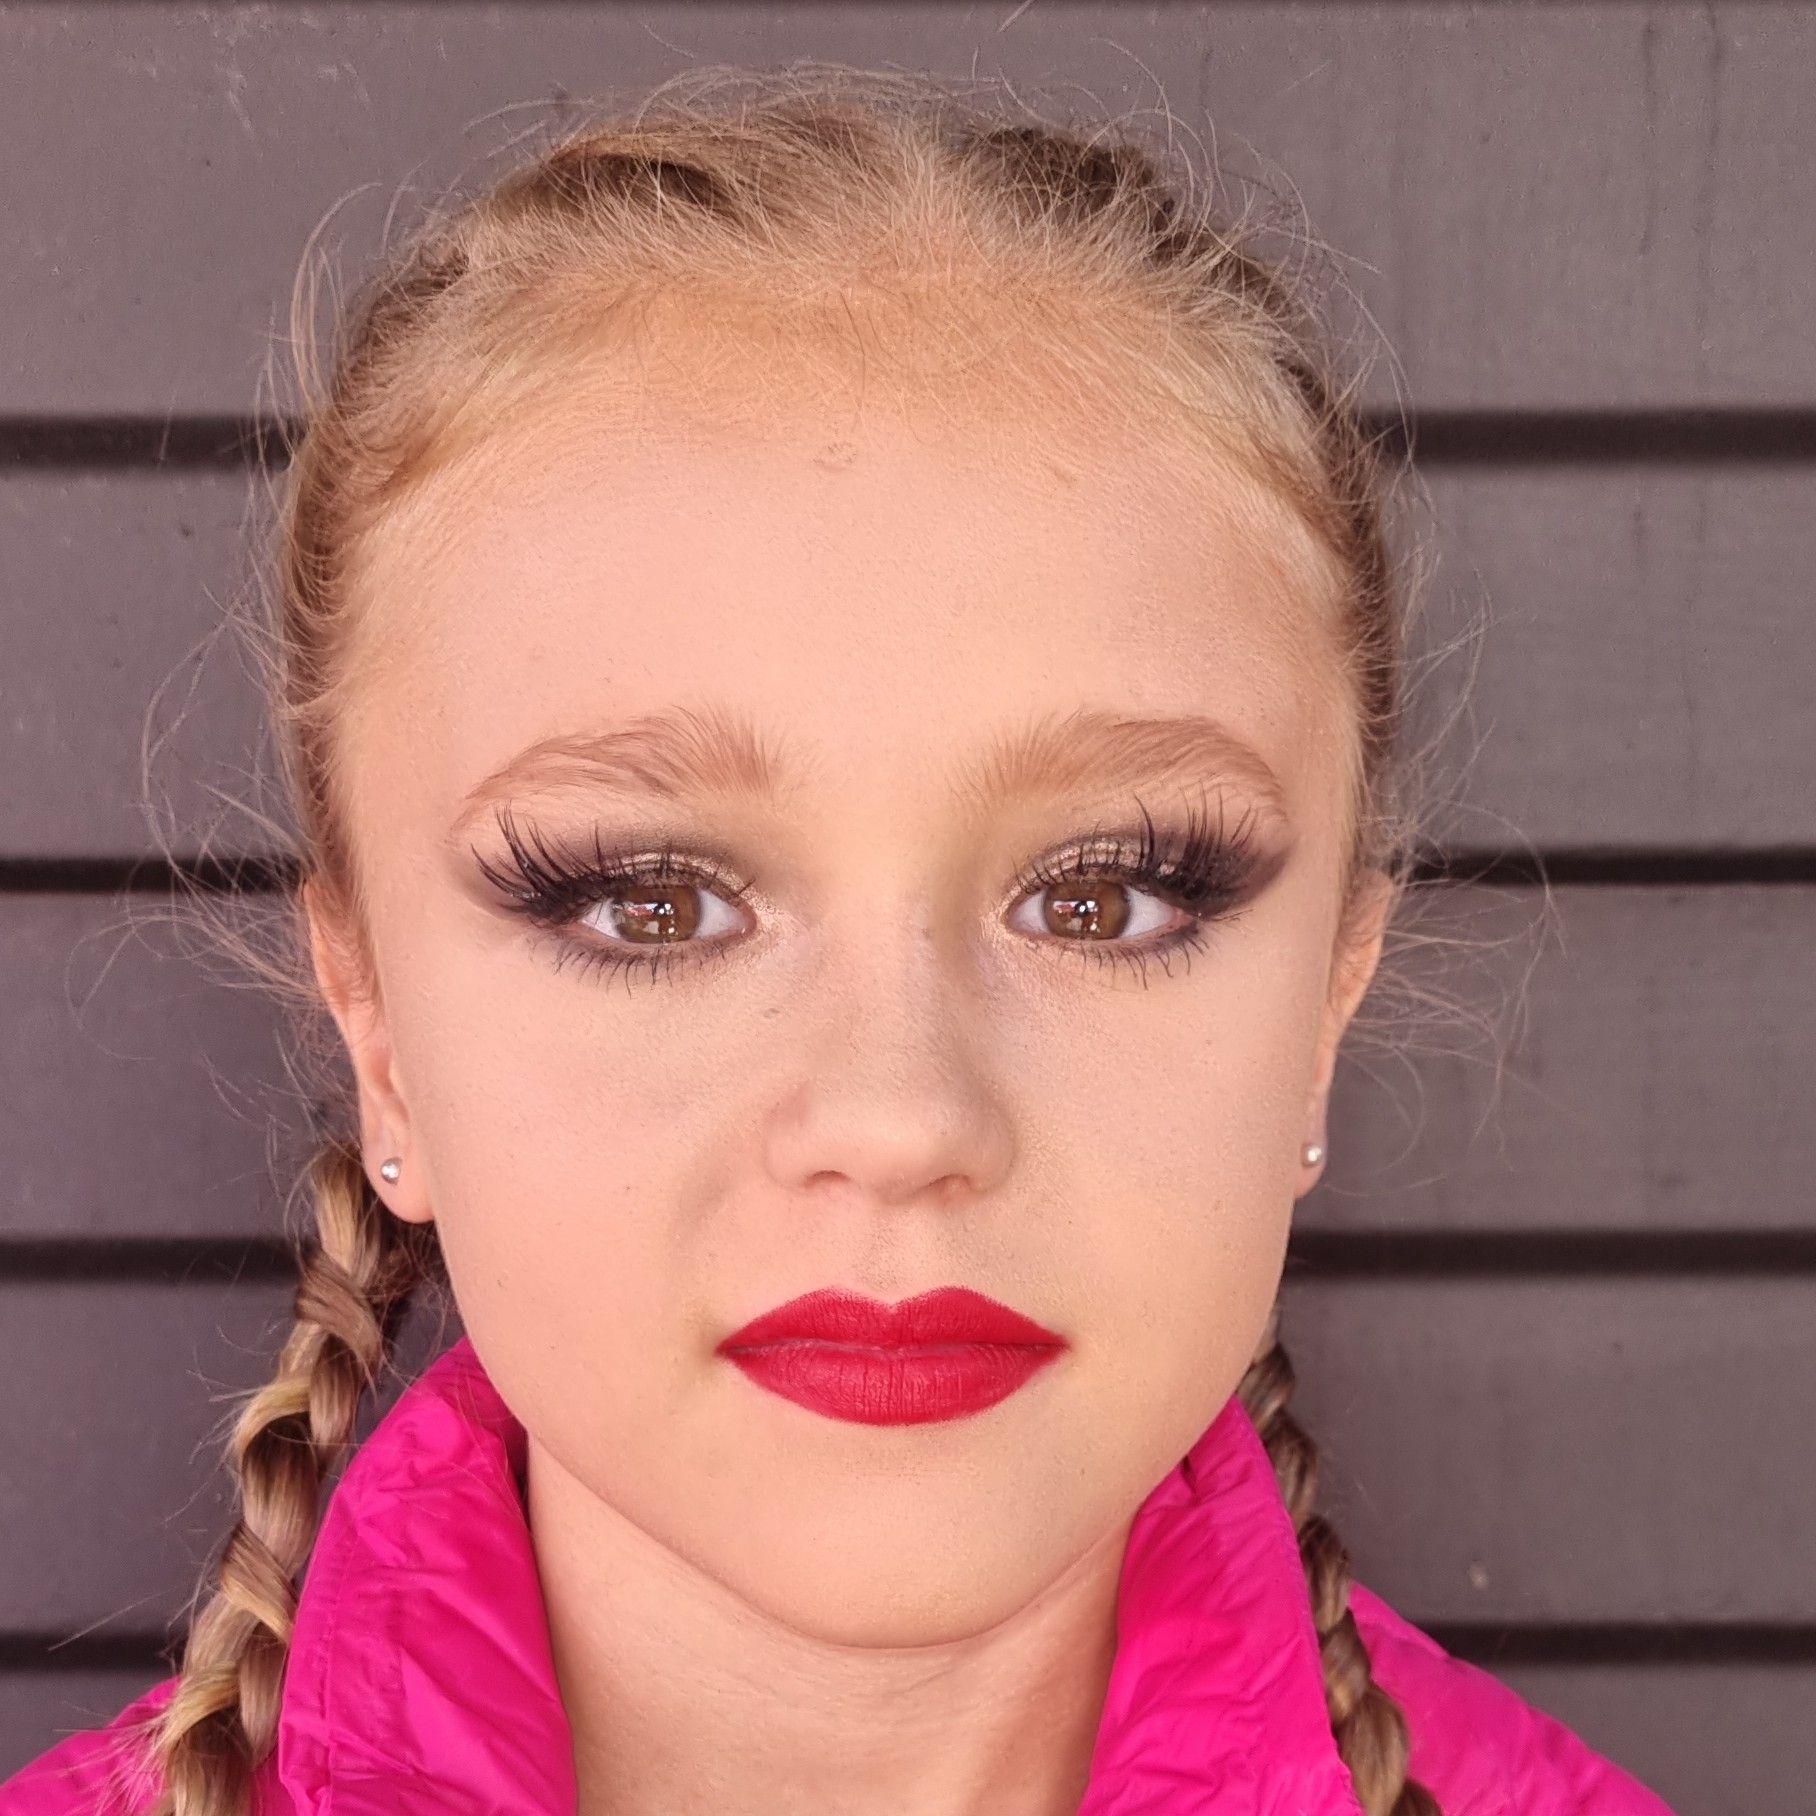 Mini's Make-Up (Girls Aged 6 to 13) portfolio